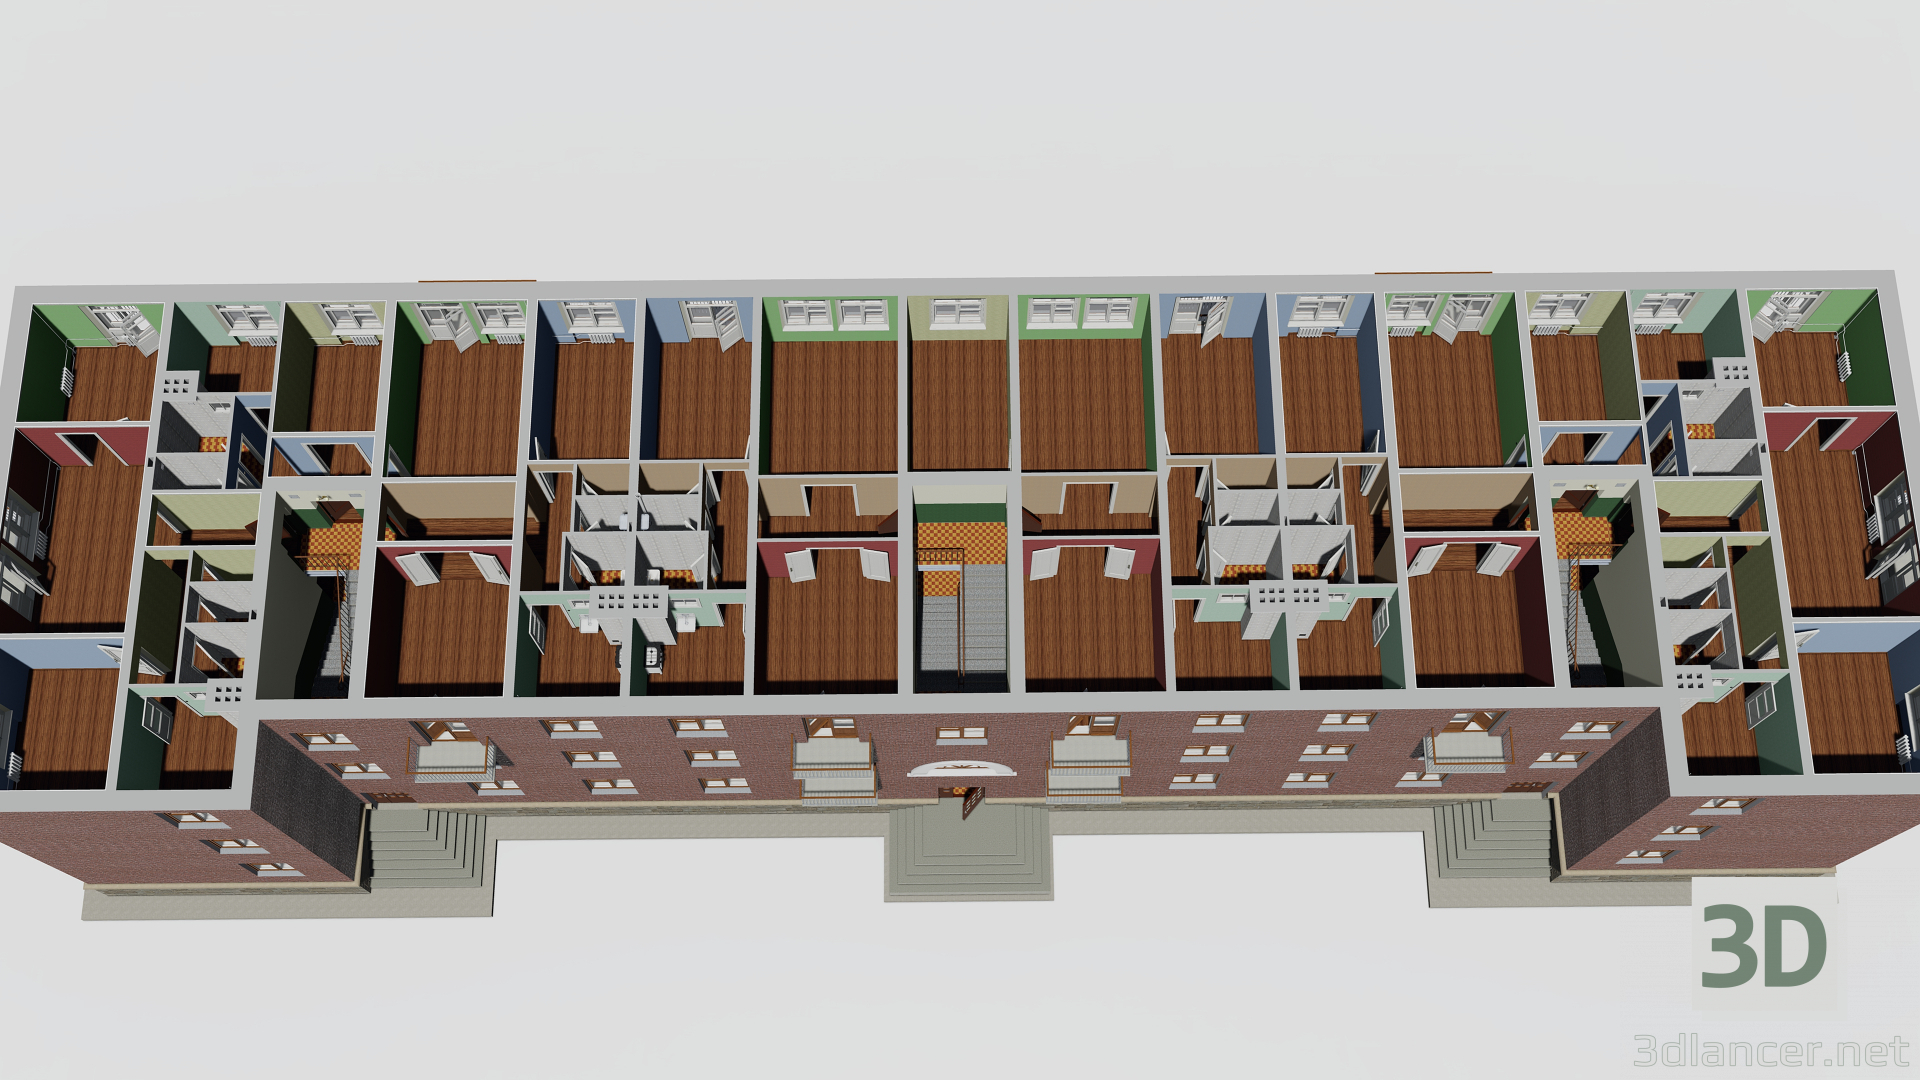 Edificio de tres pisos 1-363-13 3D modelo Compro - render